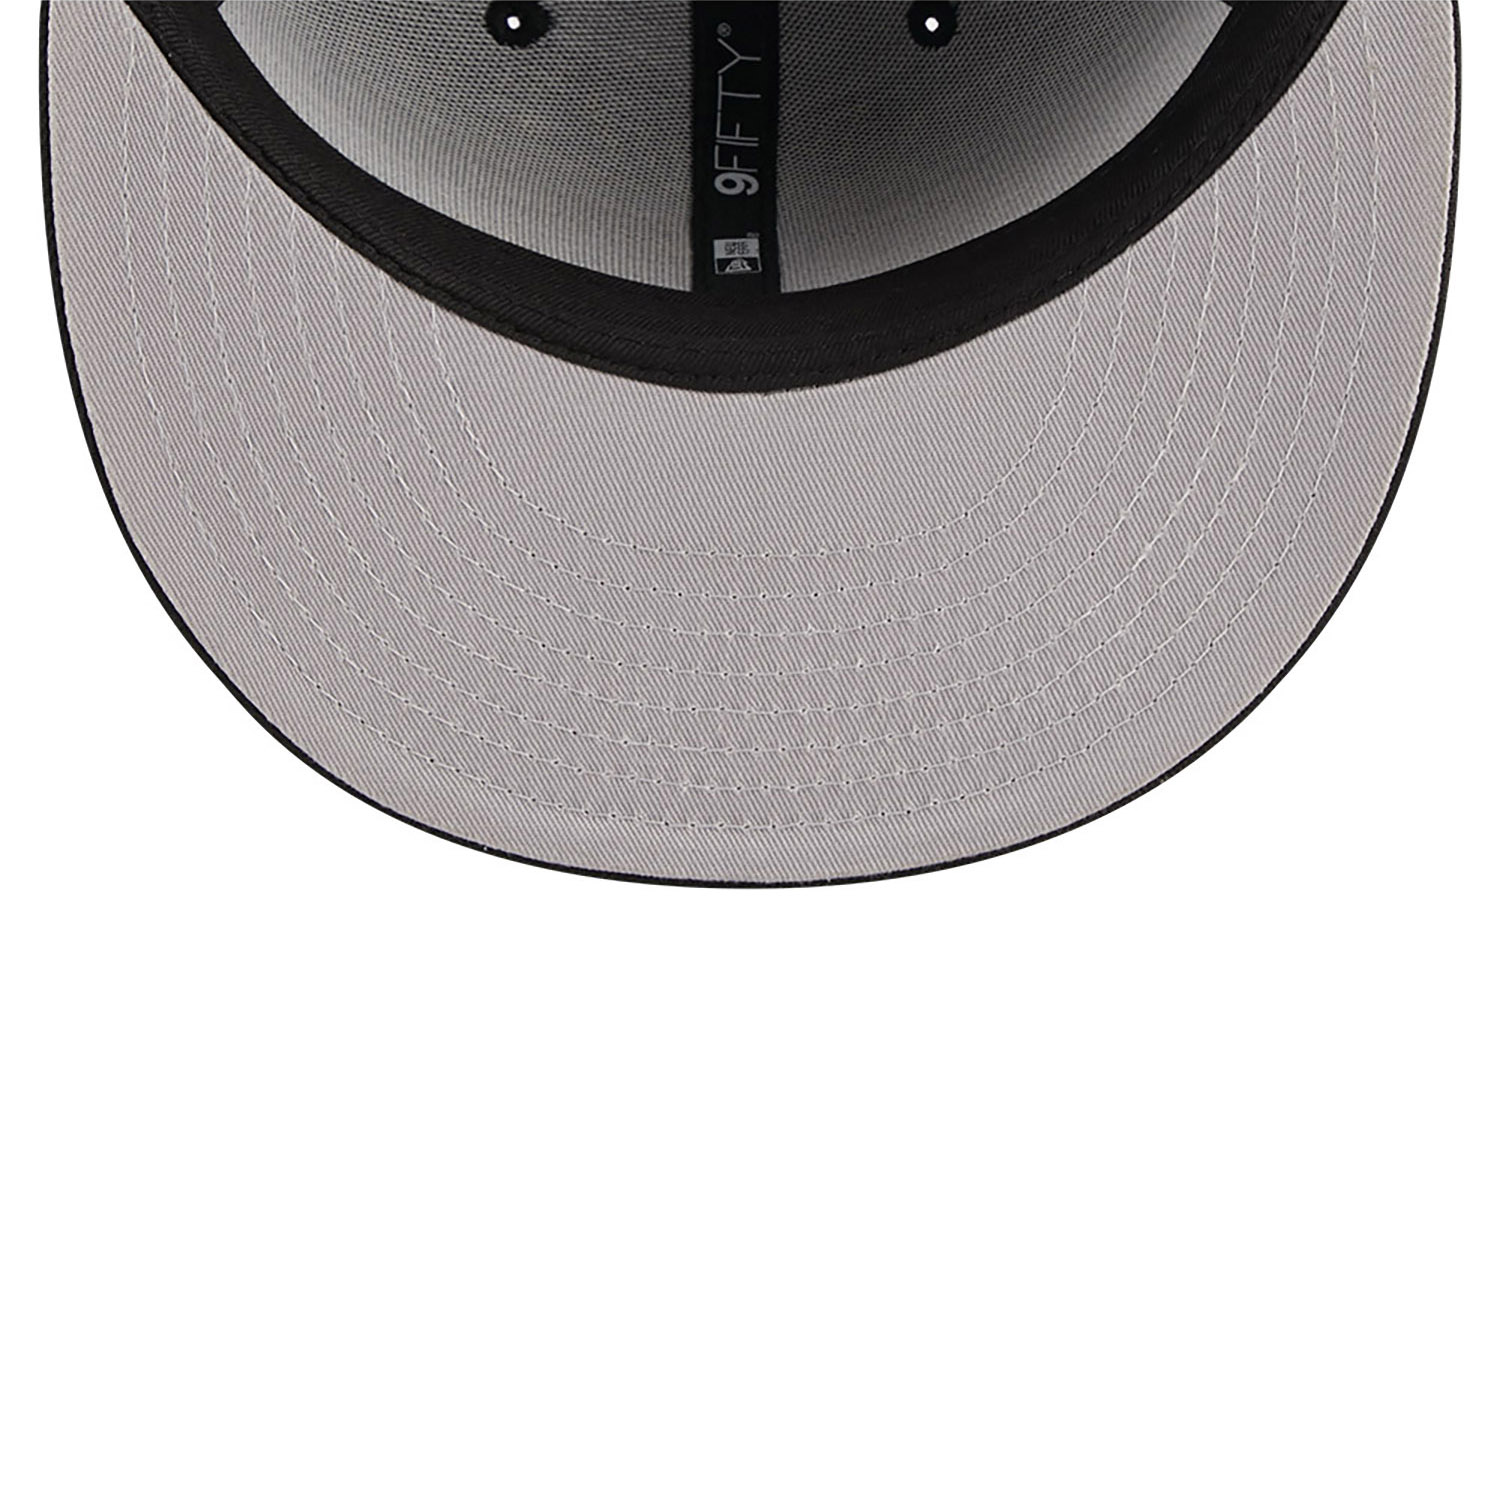 New York Yankees Metallic Logo Black 9FIFTY Snapback Cap